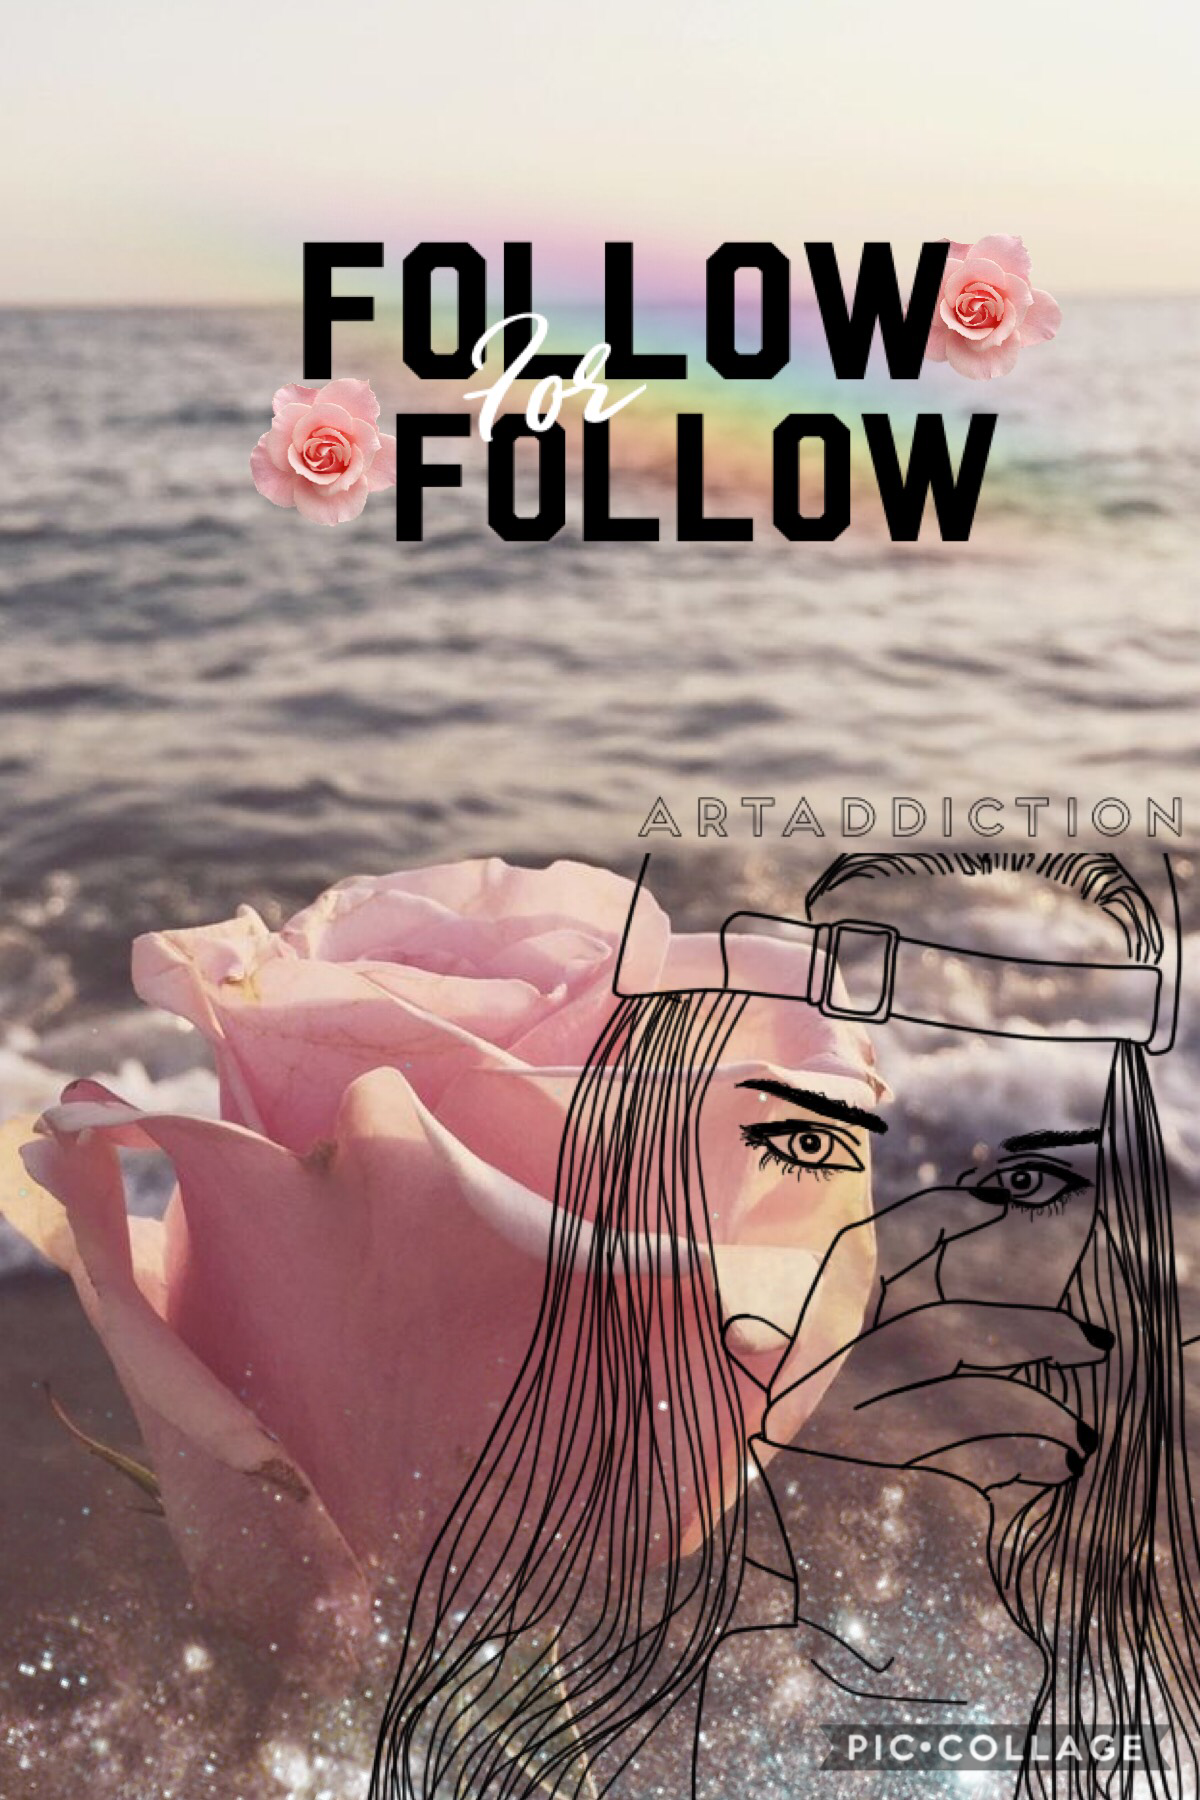 Follow for follow 💖